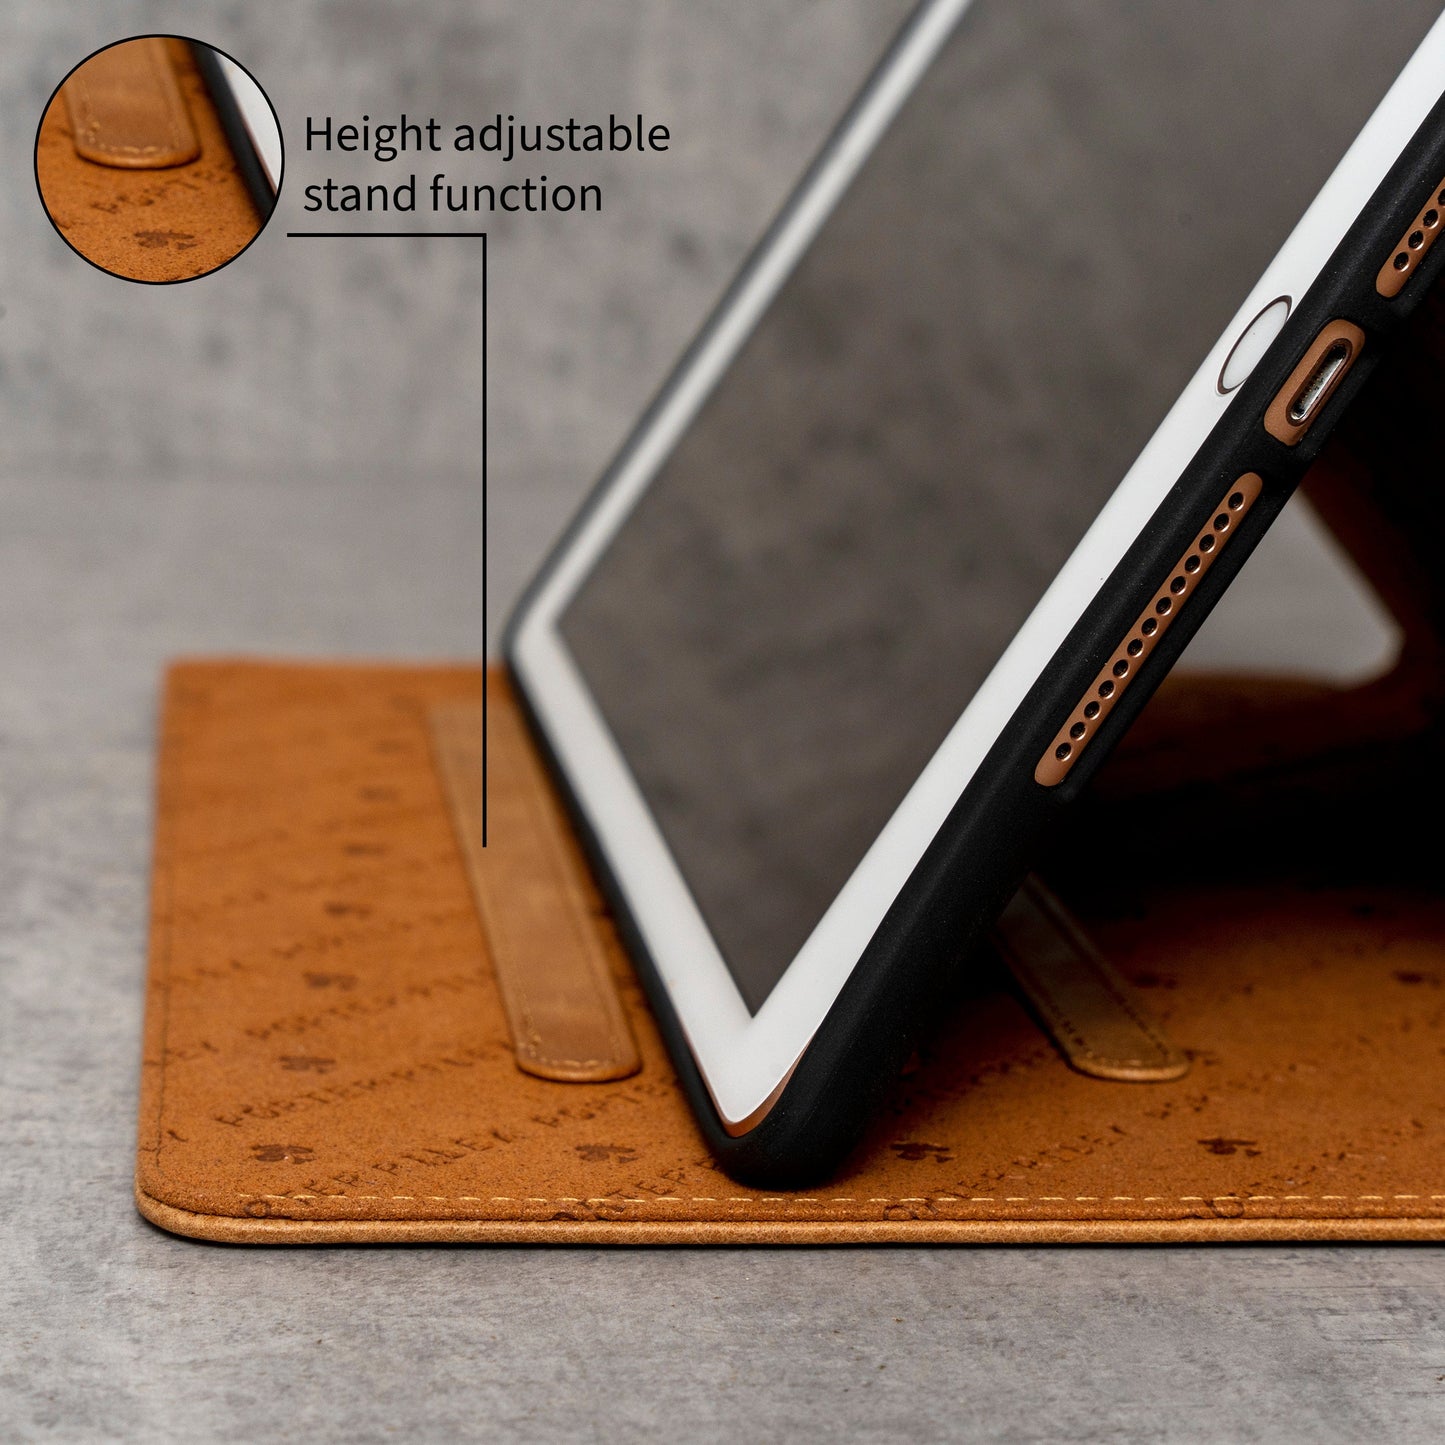 iPad Pro 10.5" (iPad Pro 2) Leather Case. Premium Slim Genuine Leather Stand Case/Cover/Wallet (Tan)